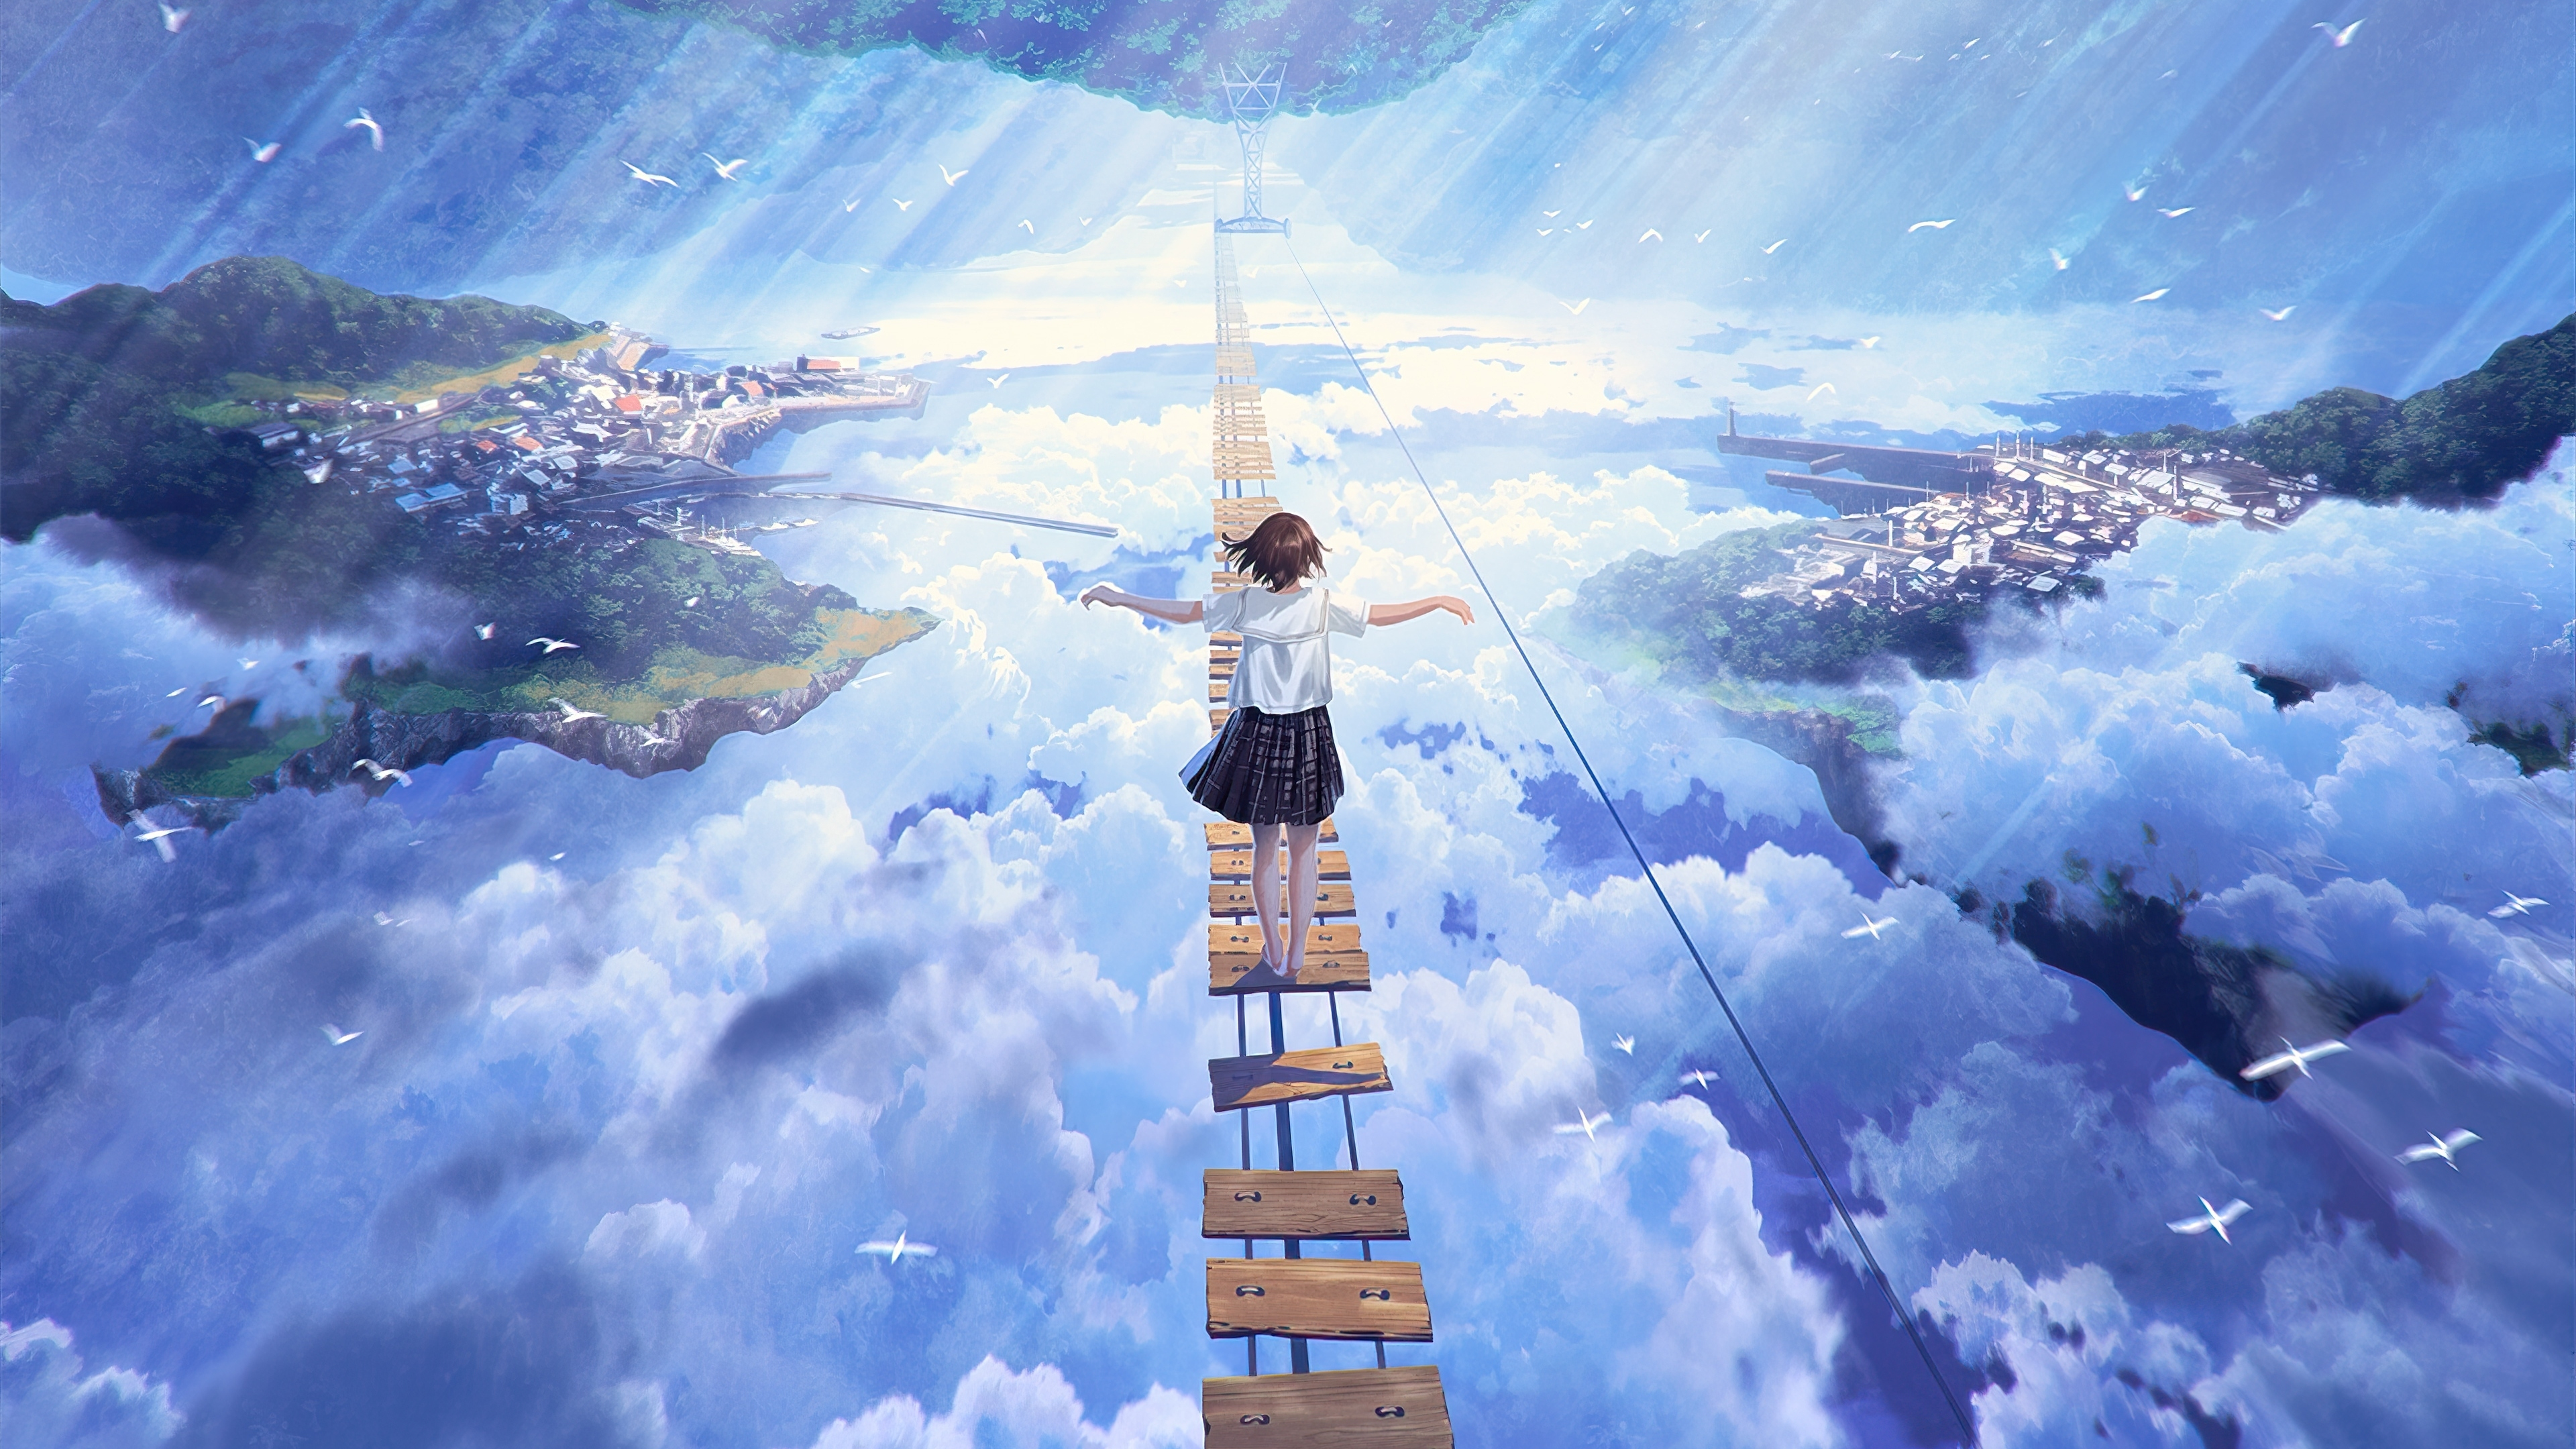 Download 3840x2160 Wallpaper Anime Girl Walking On Dream Bridge Clouds Artwork 4k Uhd 16 9 Widescreen 3840x2160 Hd Image Background